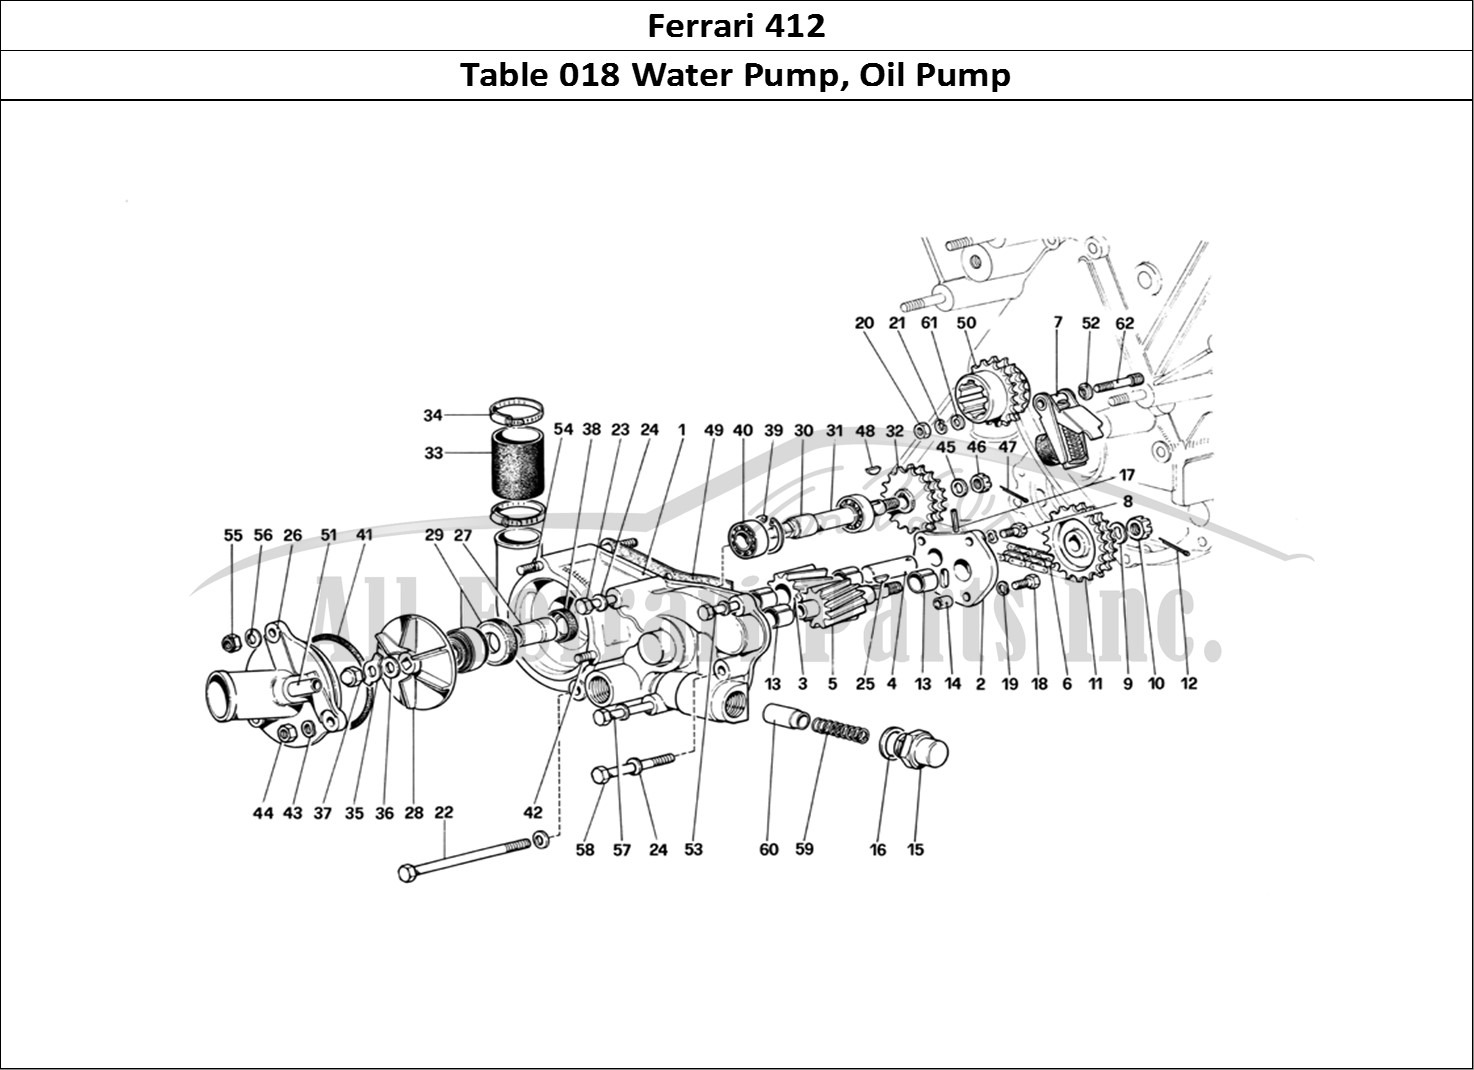 Ferrari Parts Ferrari 412 (Mechanical) Page 018 Water Pump and Engine Oil